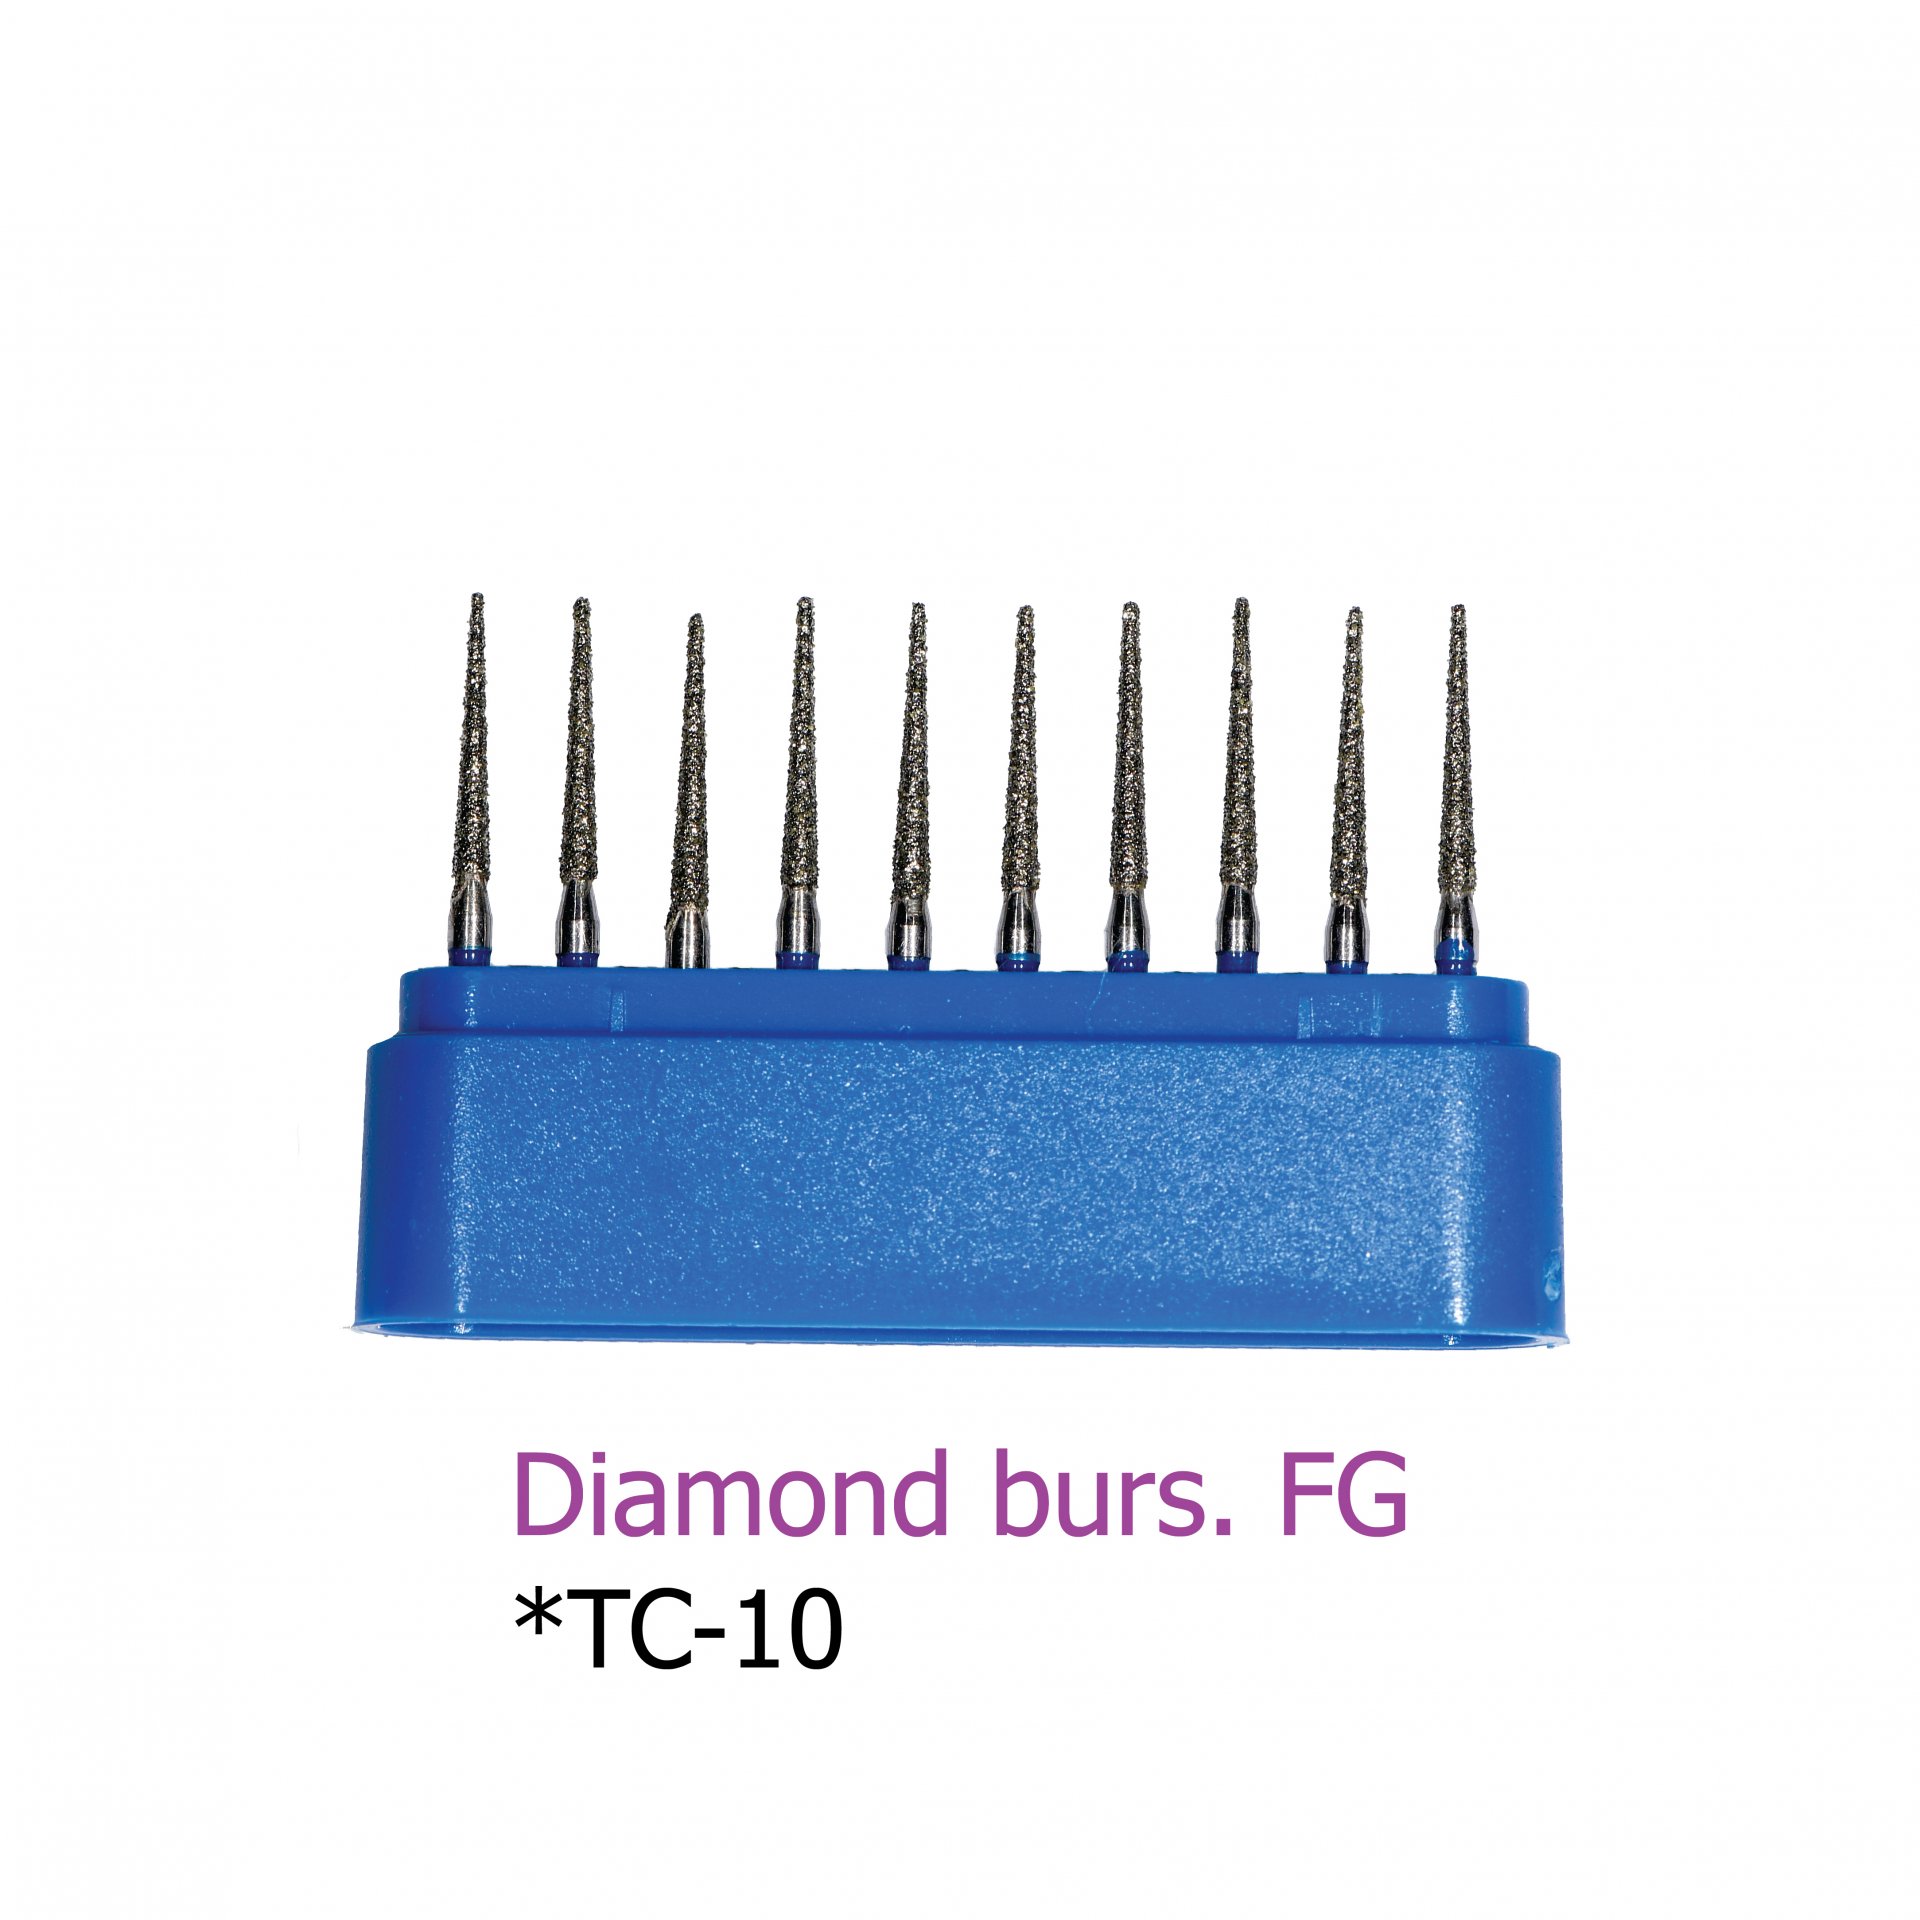 Diamond burs. FG *TC-10